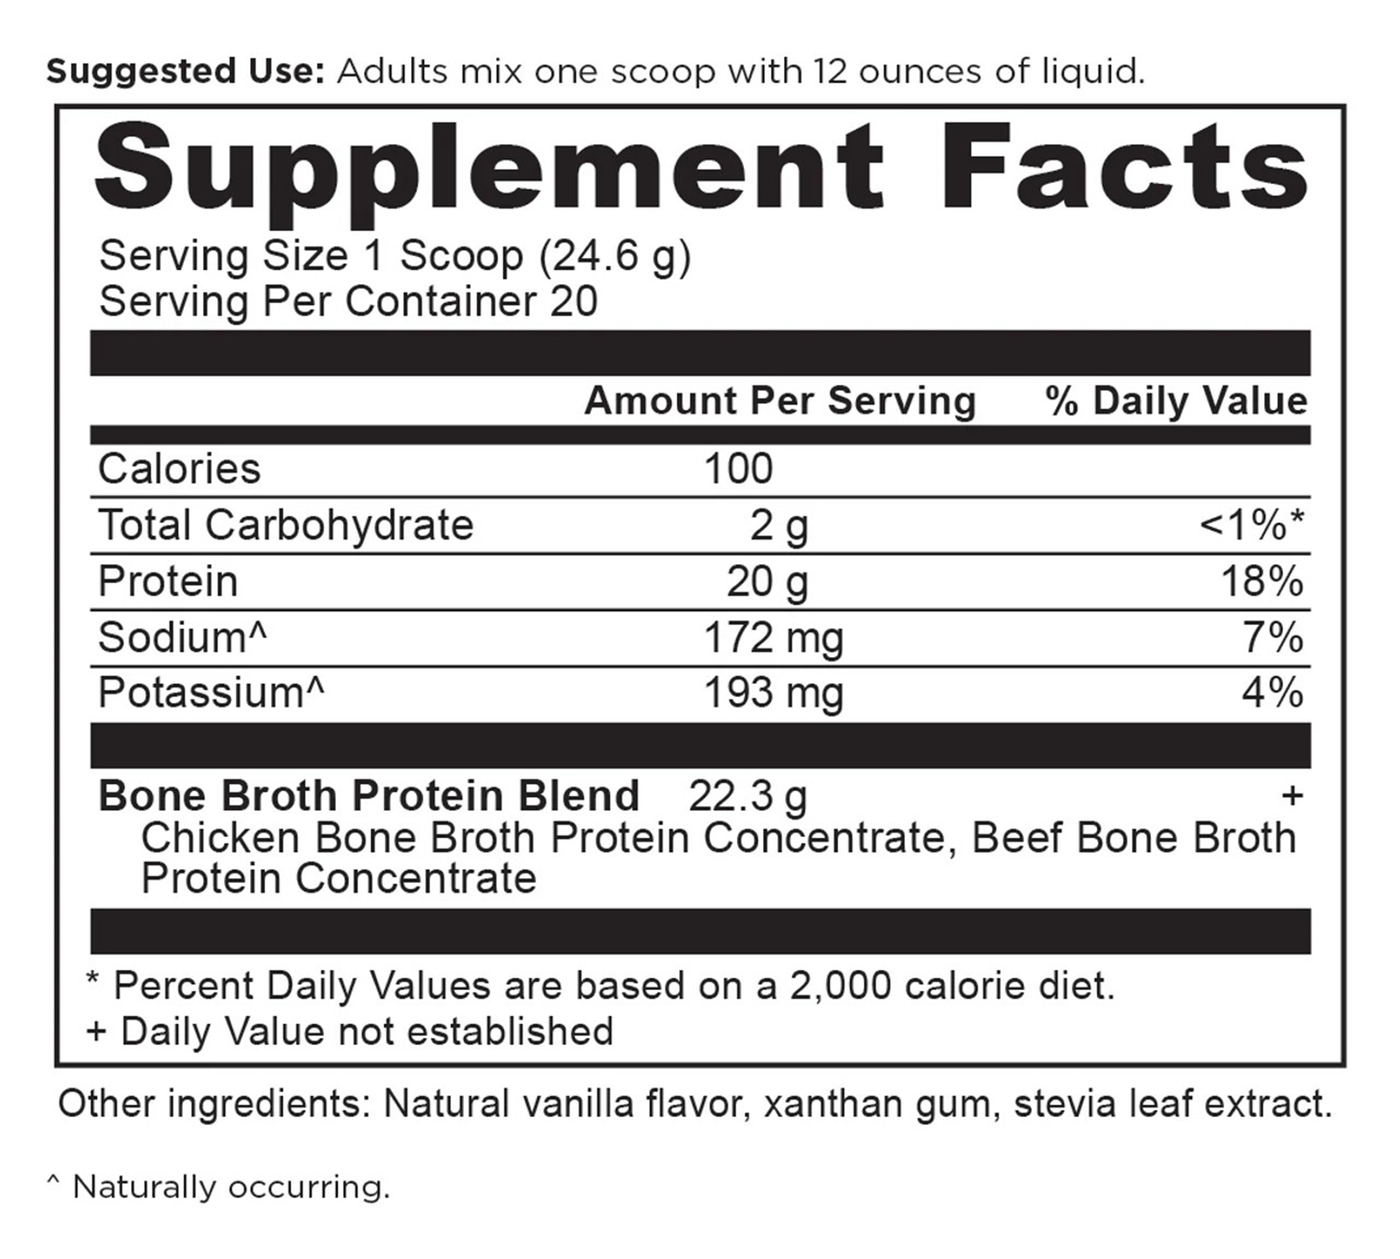 Bone Broth Protein Vanilla  Curated Wellness